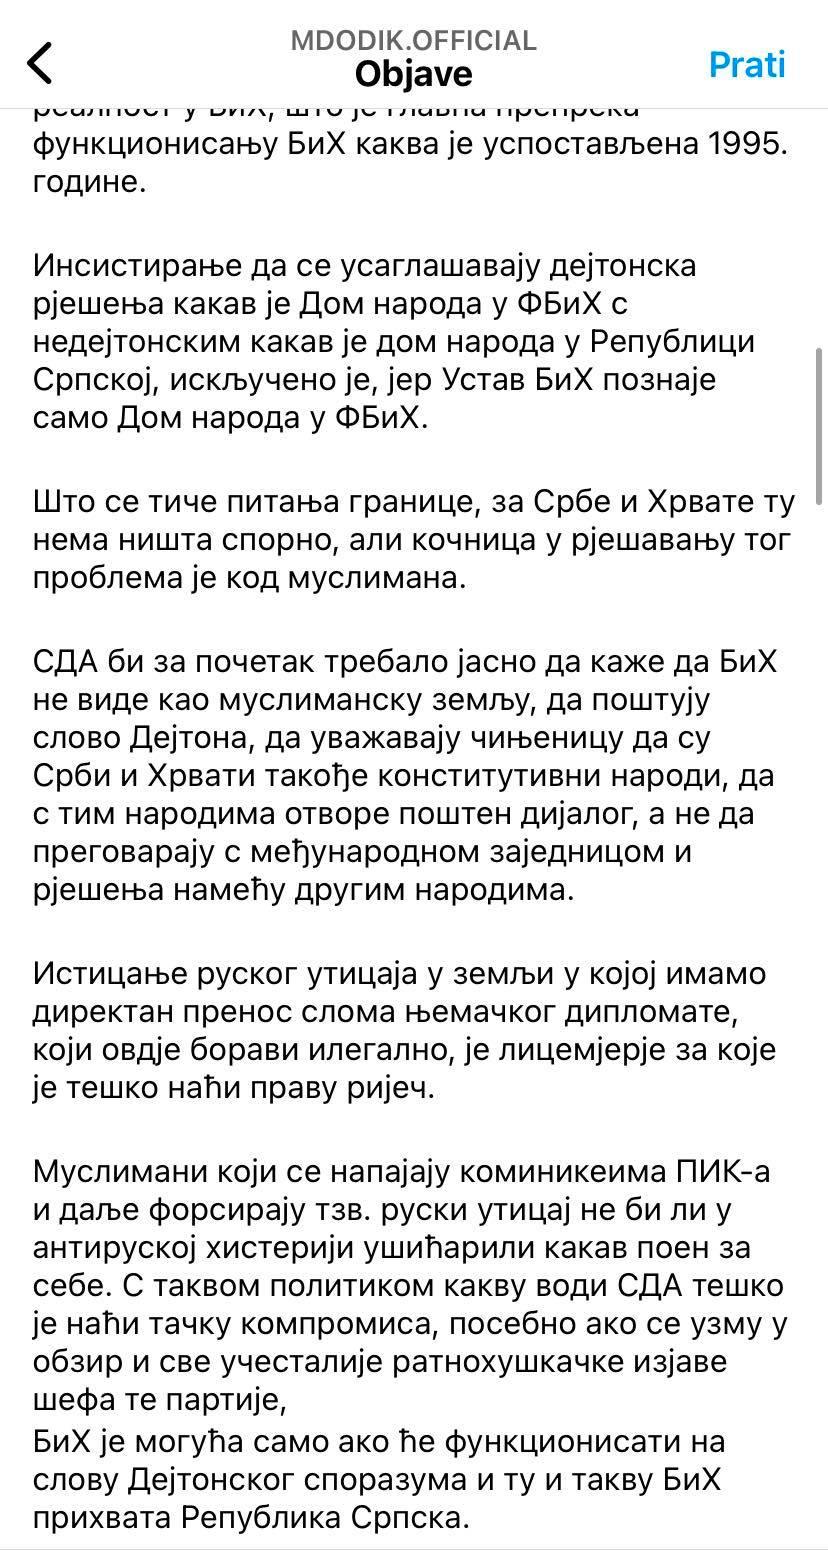 Objava Dodika na Instagramu - Avaz